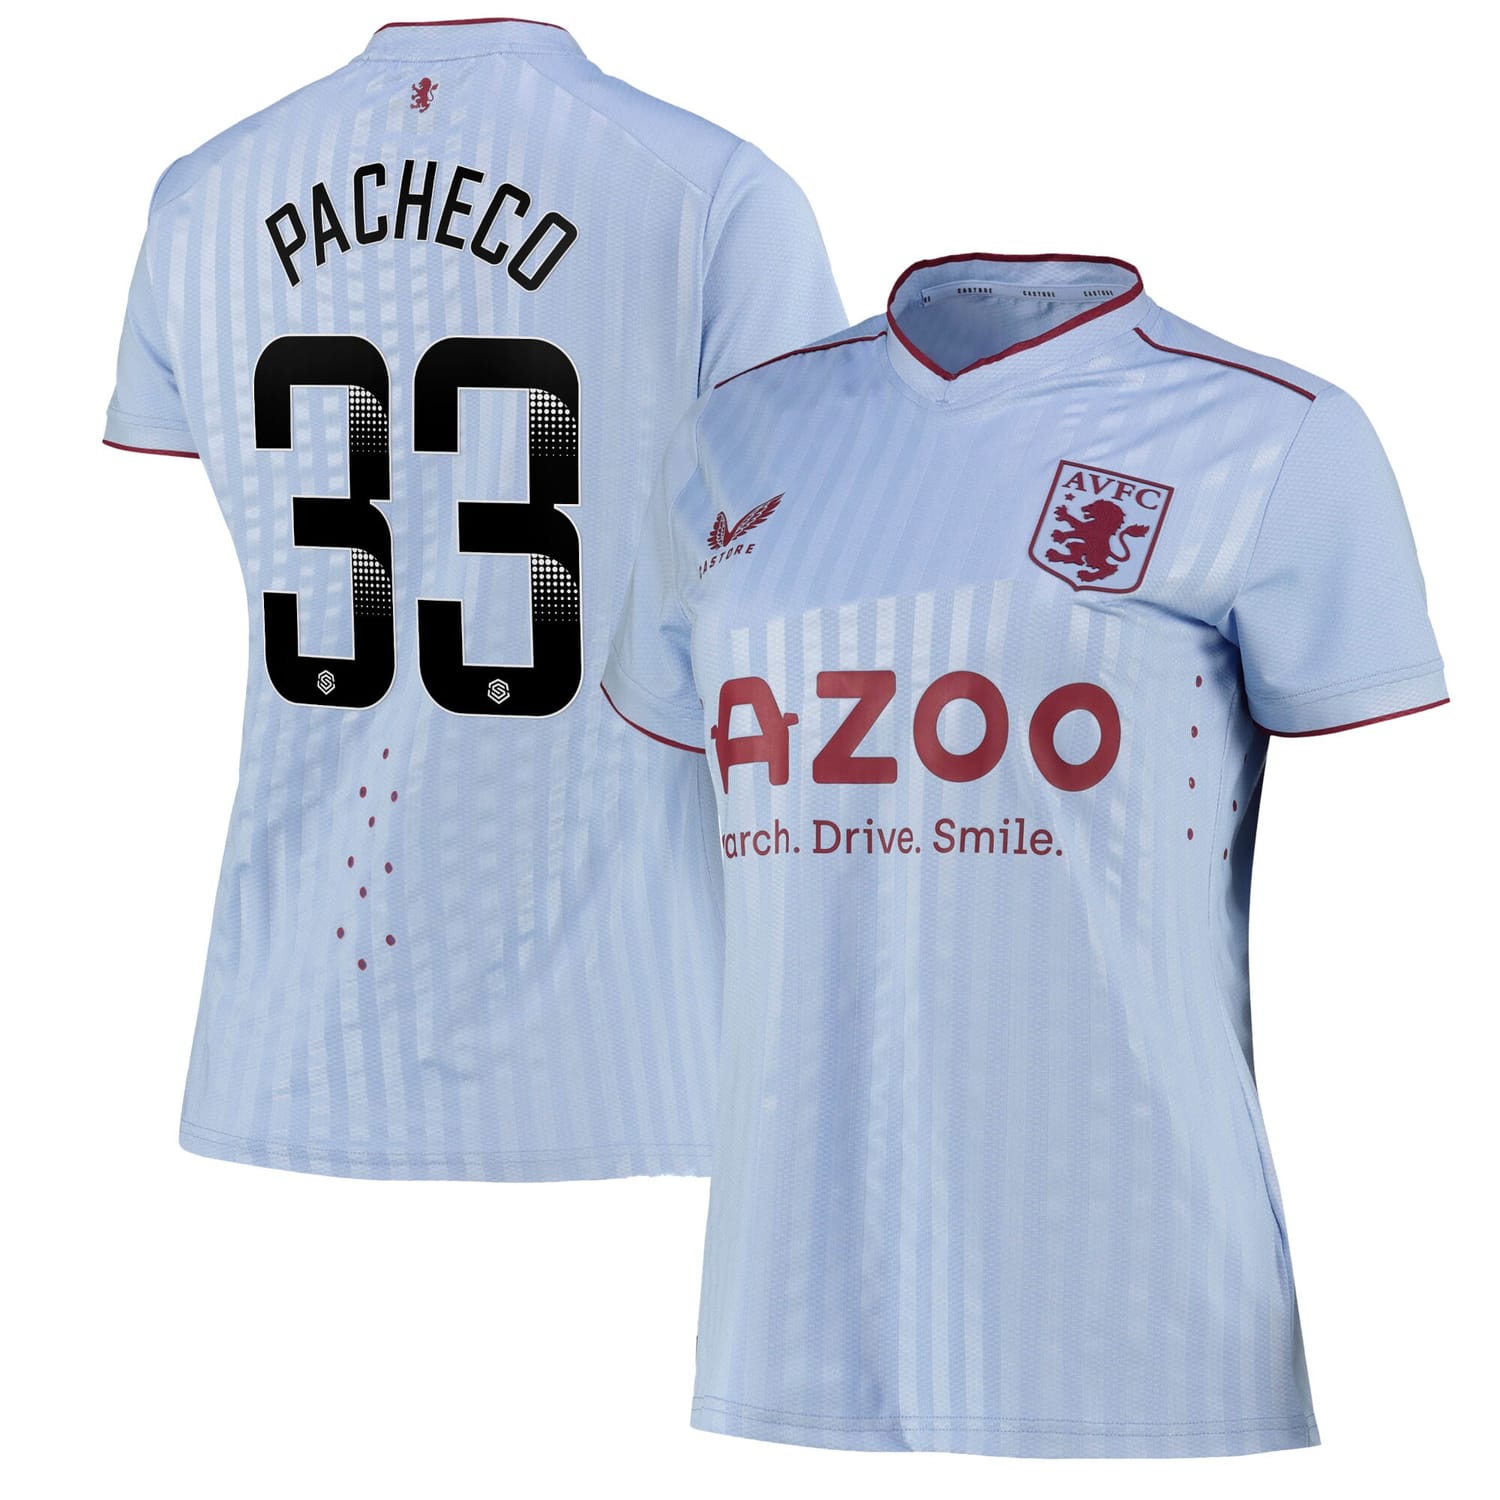 Premier League Aston Villa Away WSL Pro Jersey Shirt 2022-23 player Mayumi Pacheco 33 printing for Women